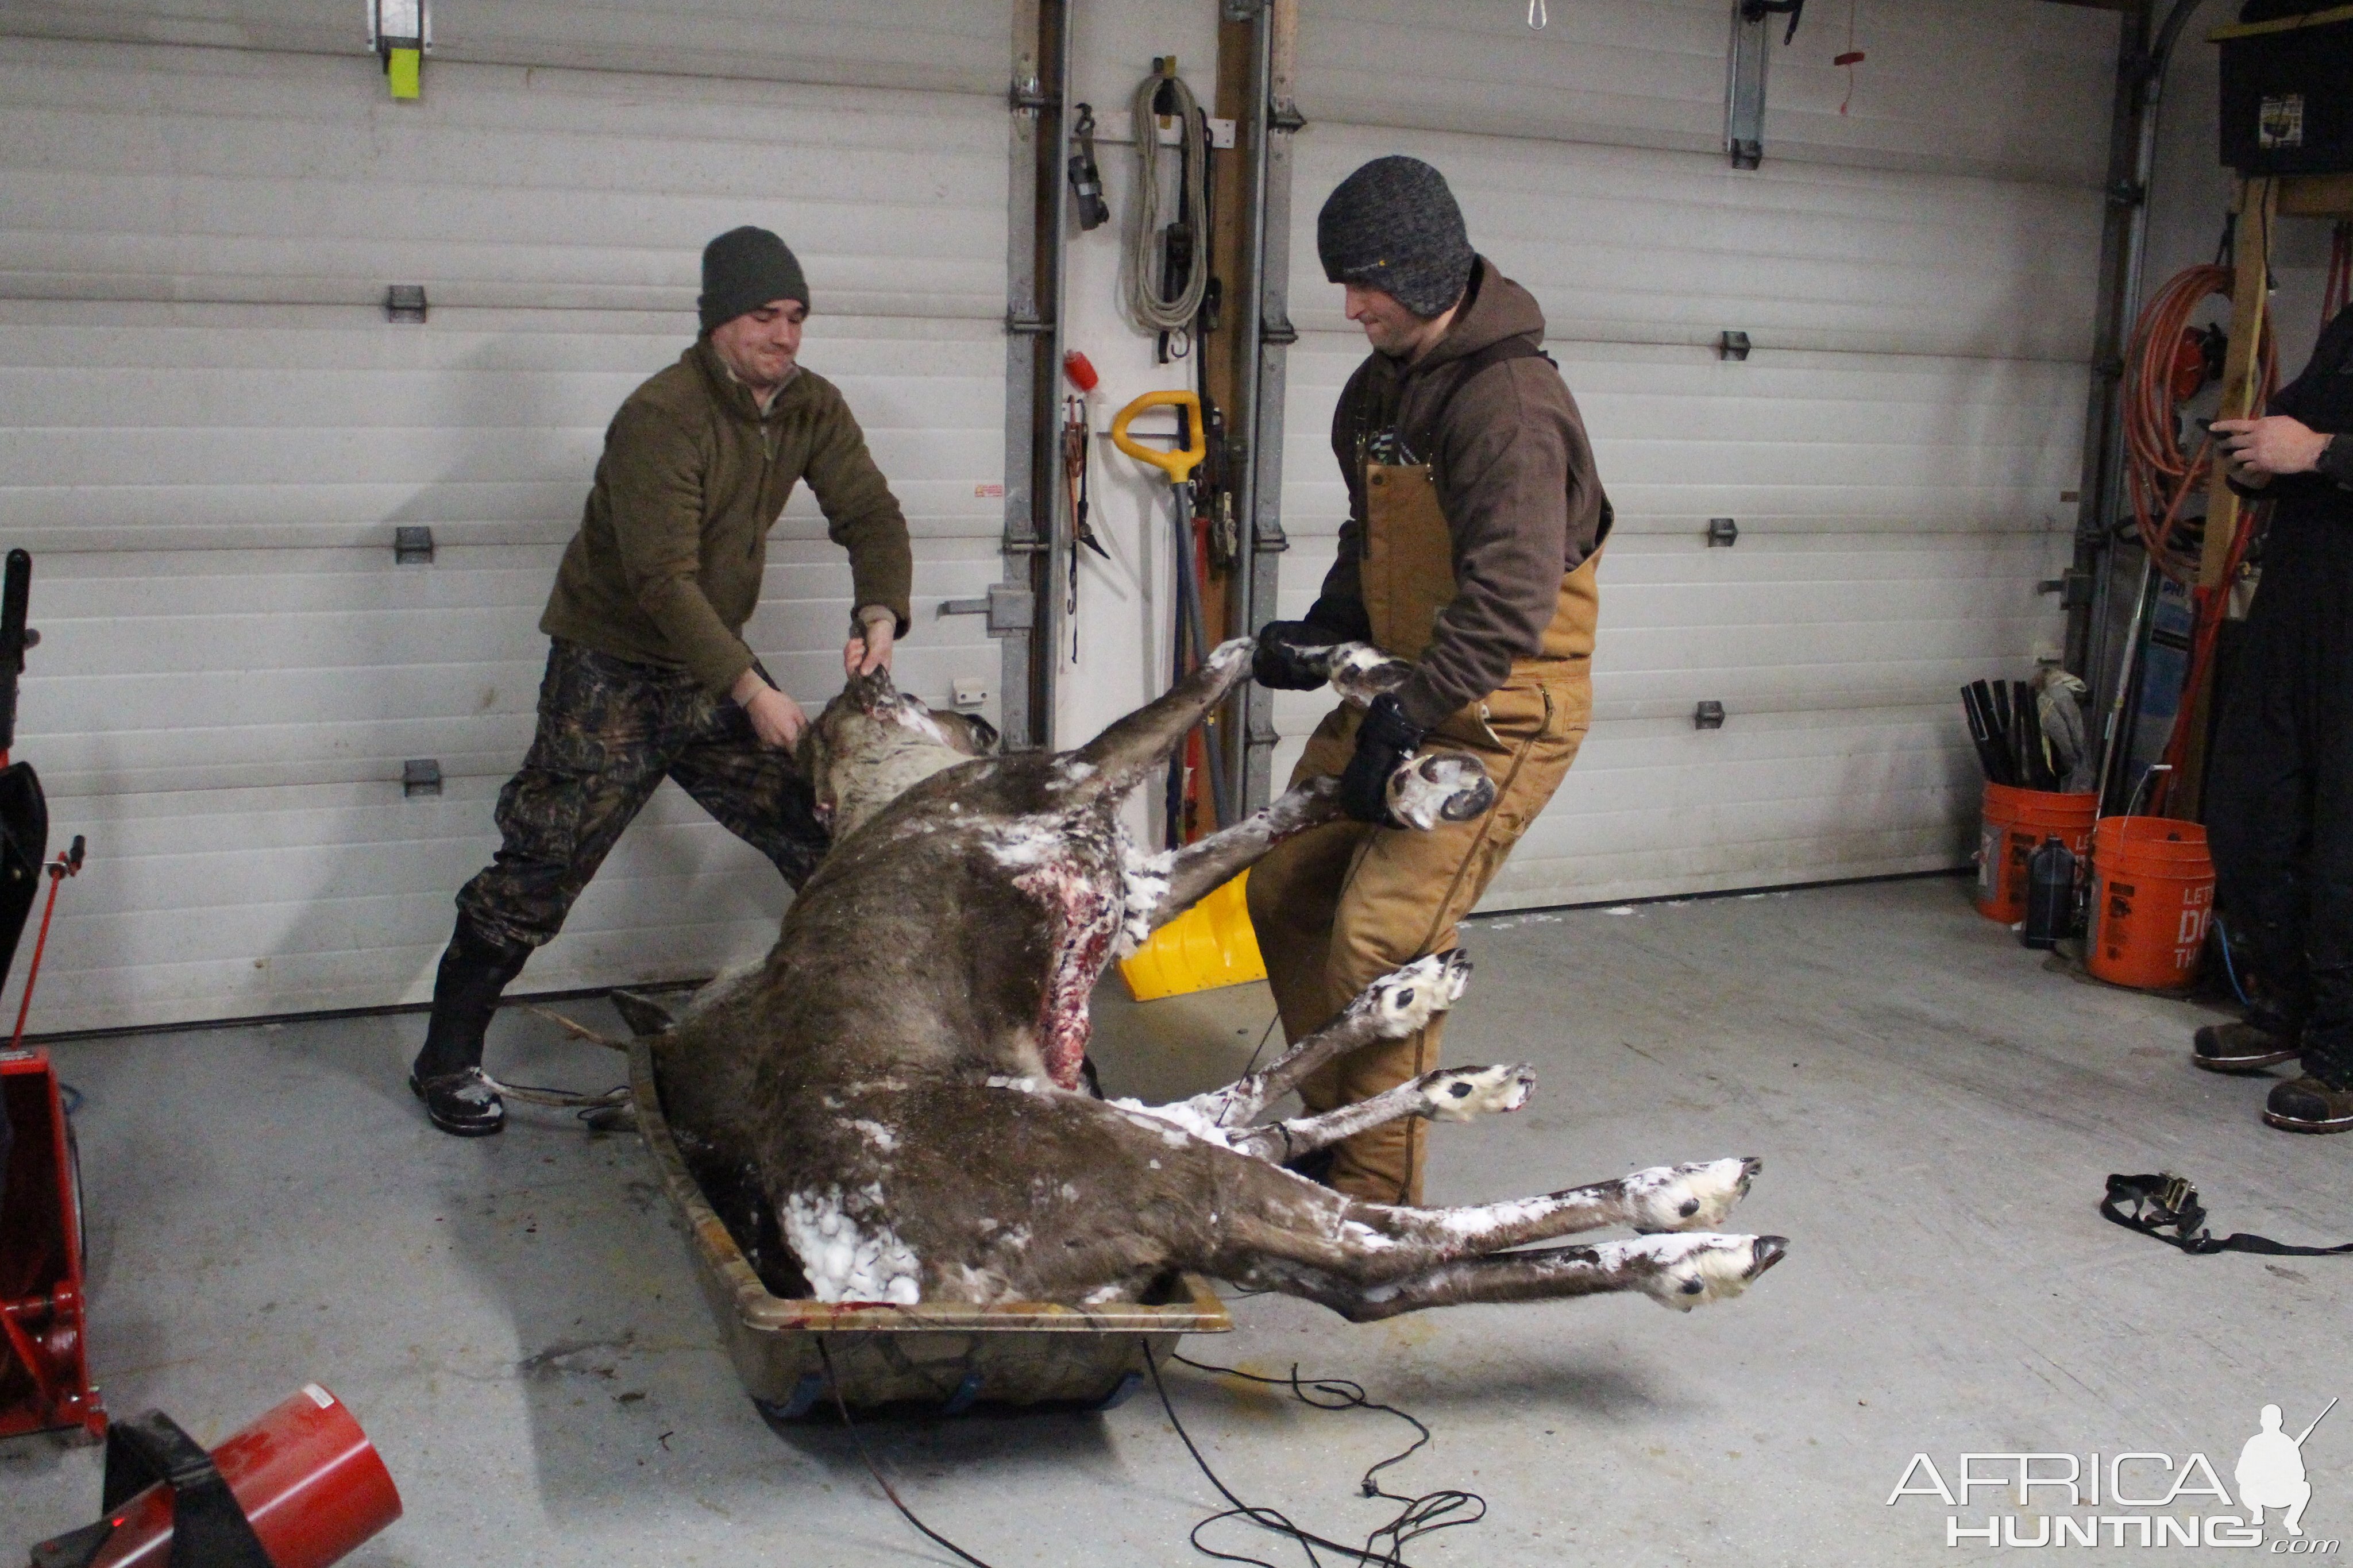 Arctic Caribou Hunt In 22 Below Zero Feirenhight Temps